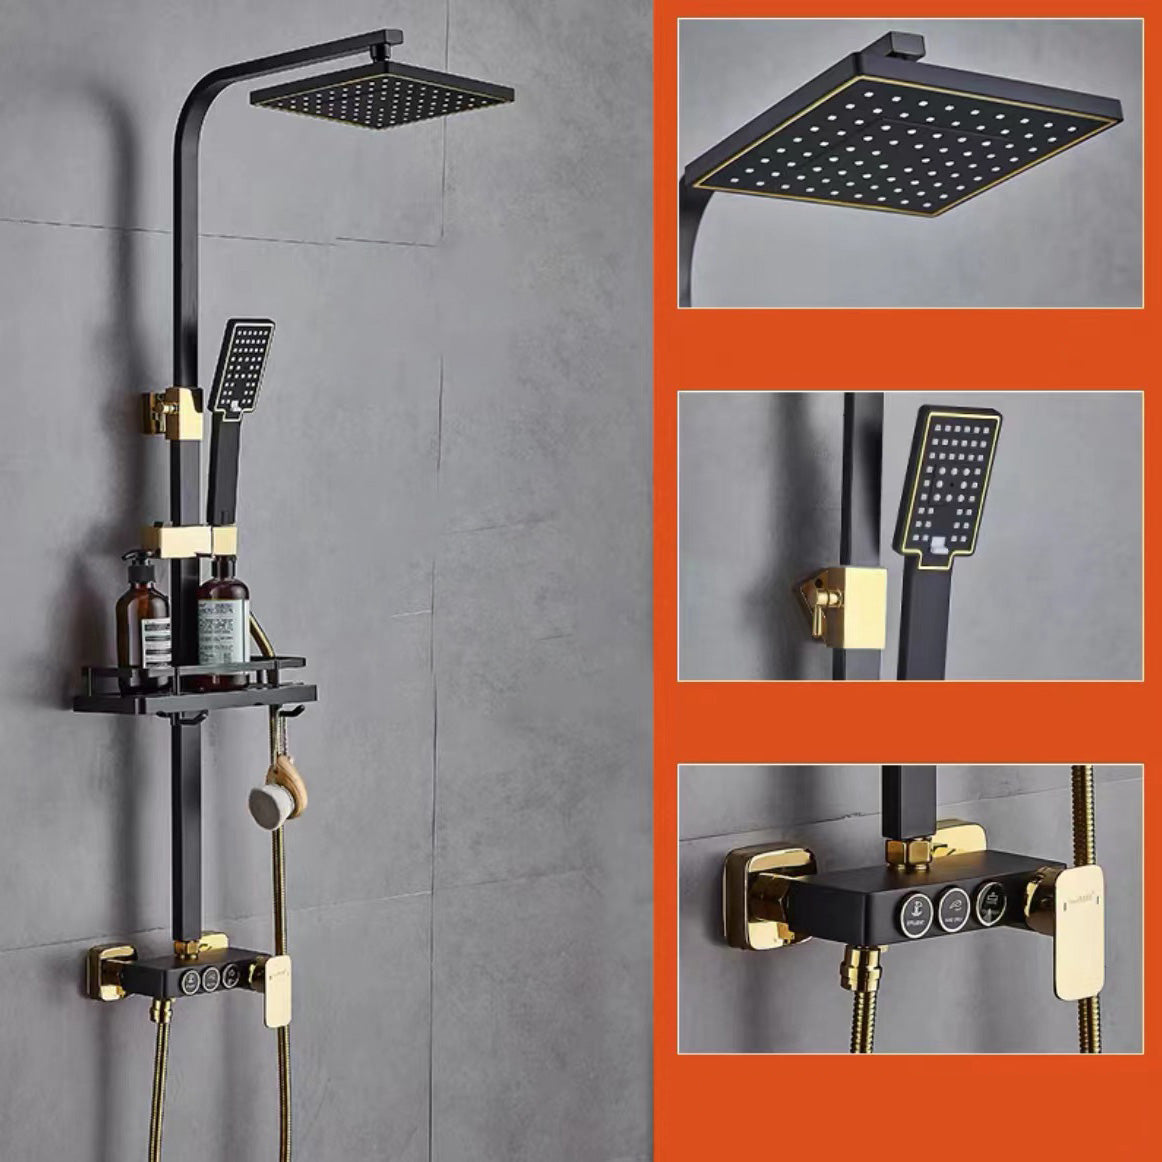 Wall Mounted Shower Arm Shower Faucet Pressure Balanced Diverter Valve Shower System